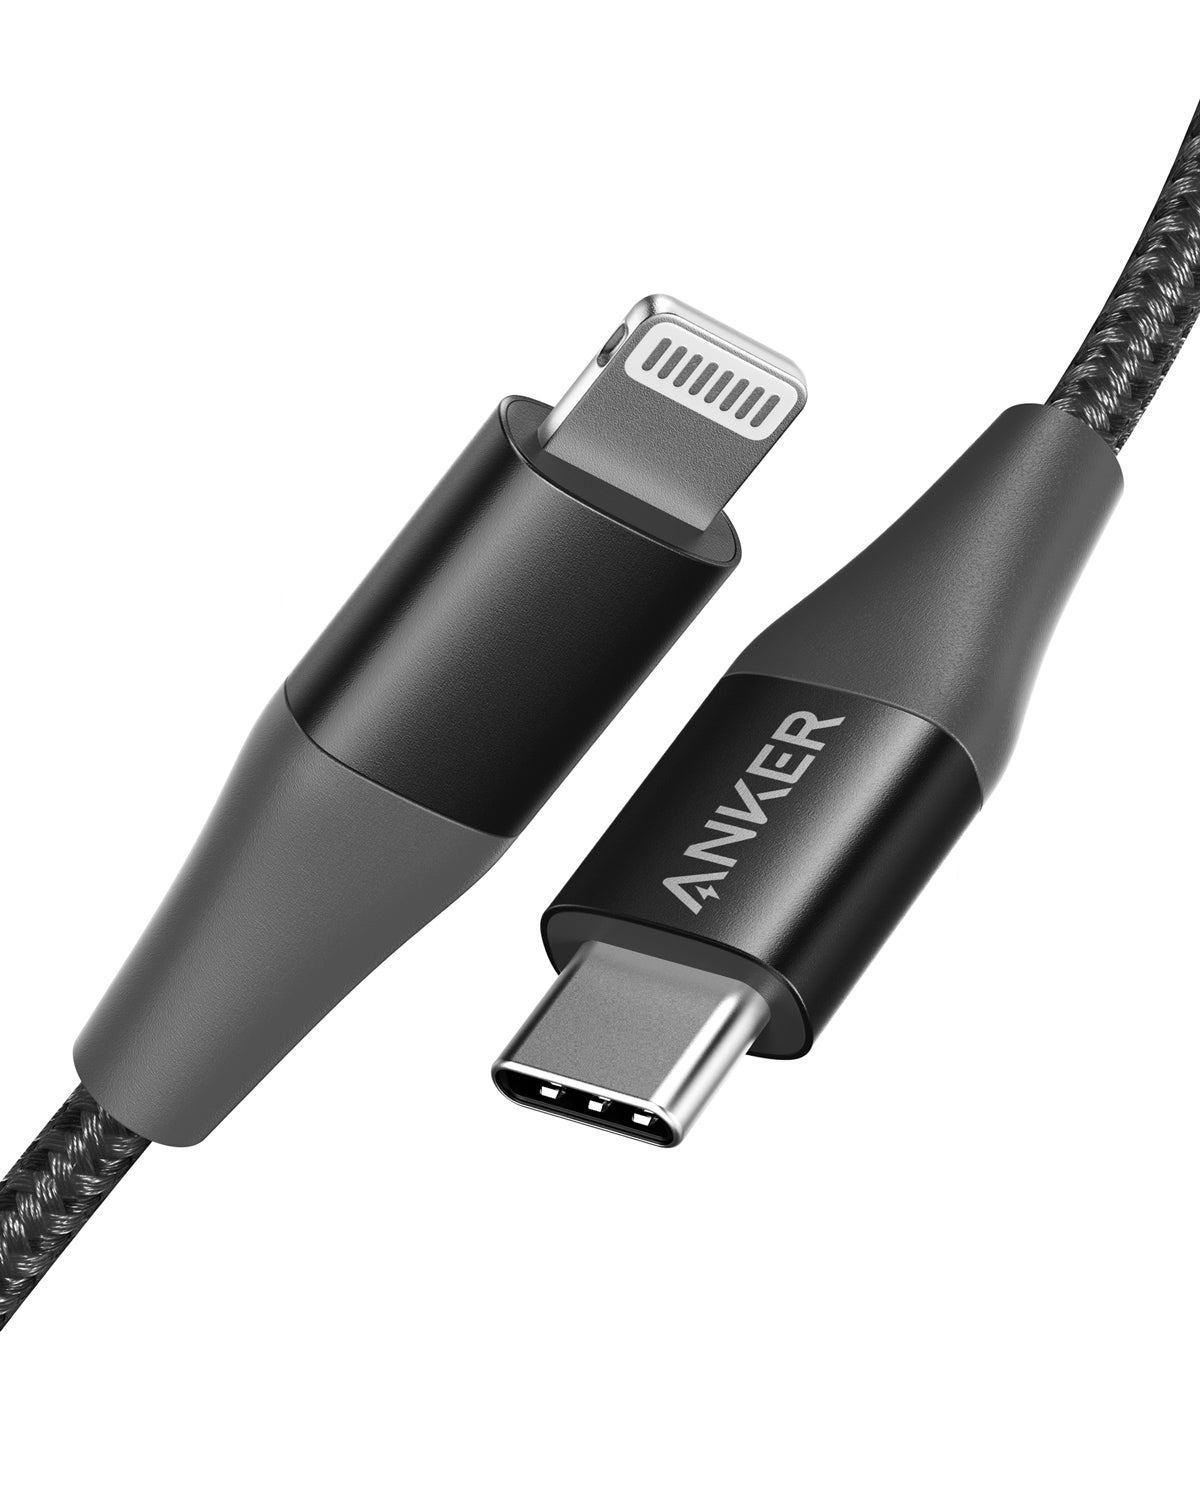 Dragende cirkel Zeeanemoon Verzoenen USB C to Lightning Cable [ Apple Mfi Certified] - Anker US